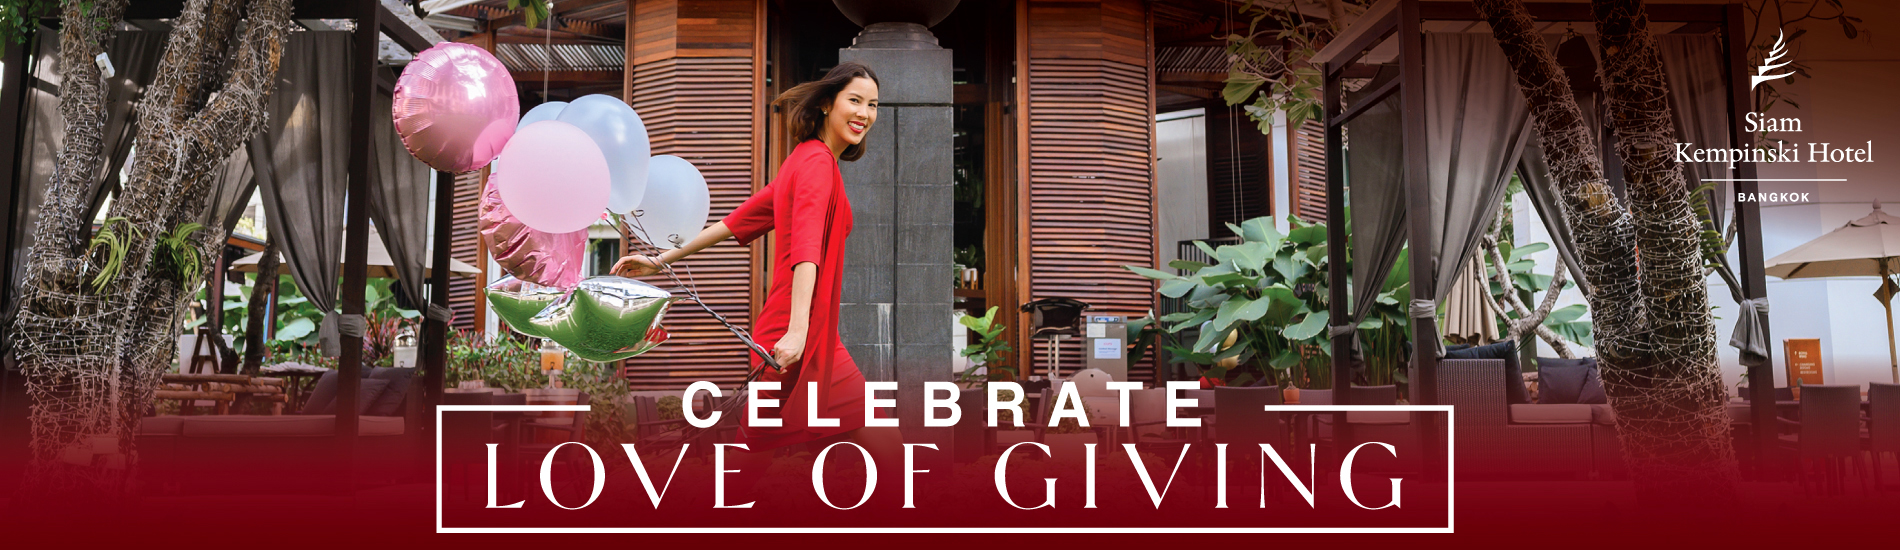 Celebrate Love of Giving